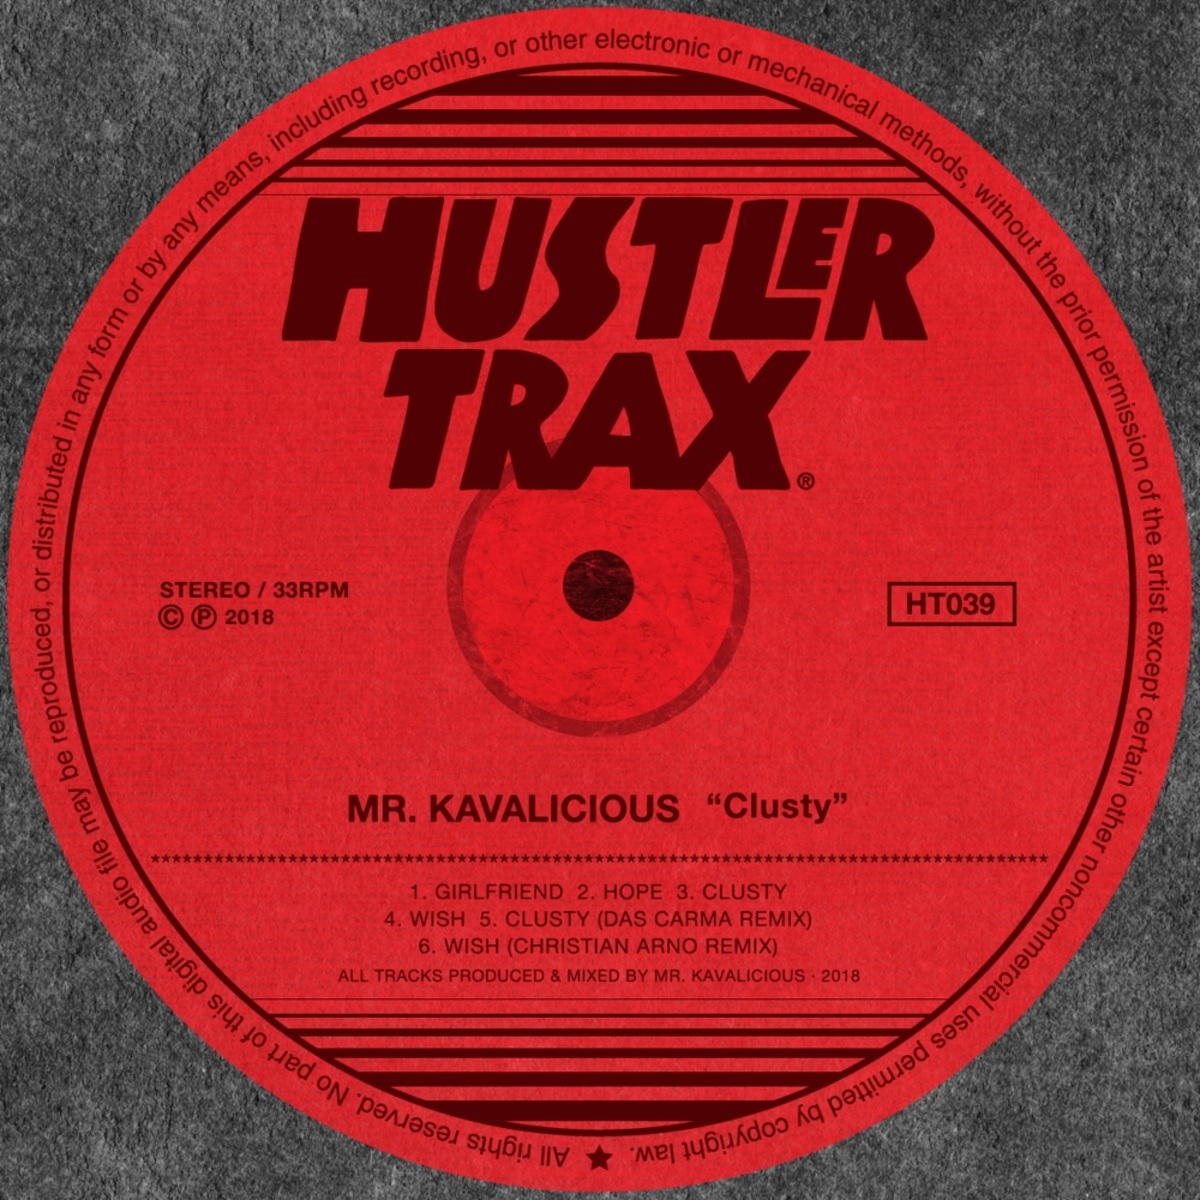 Mr. Kavalicious - Clusty / Hustler Trax